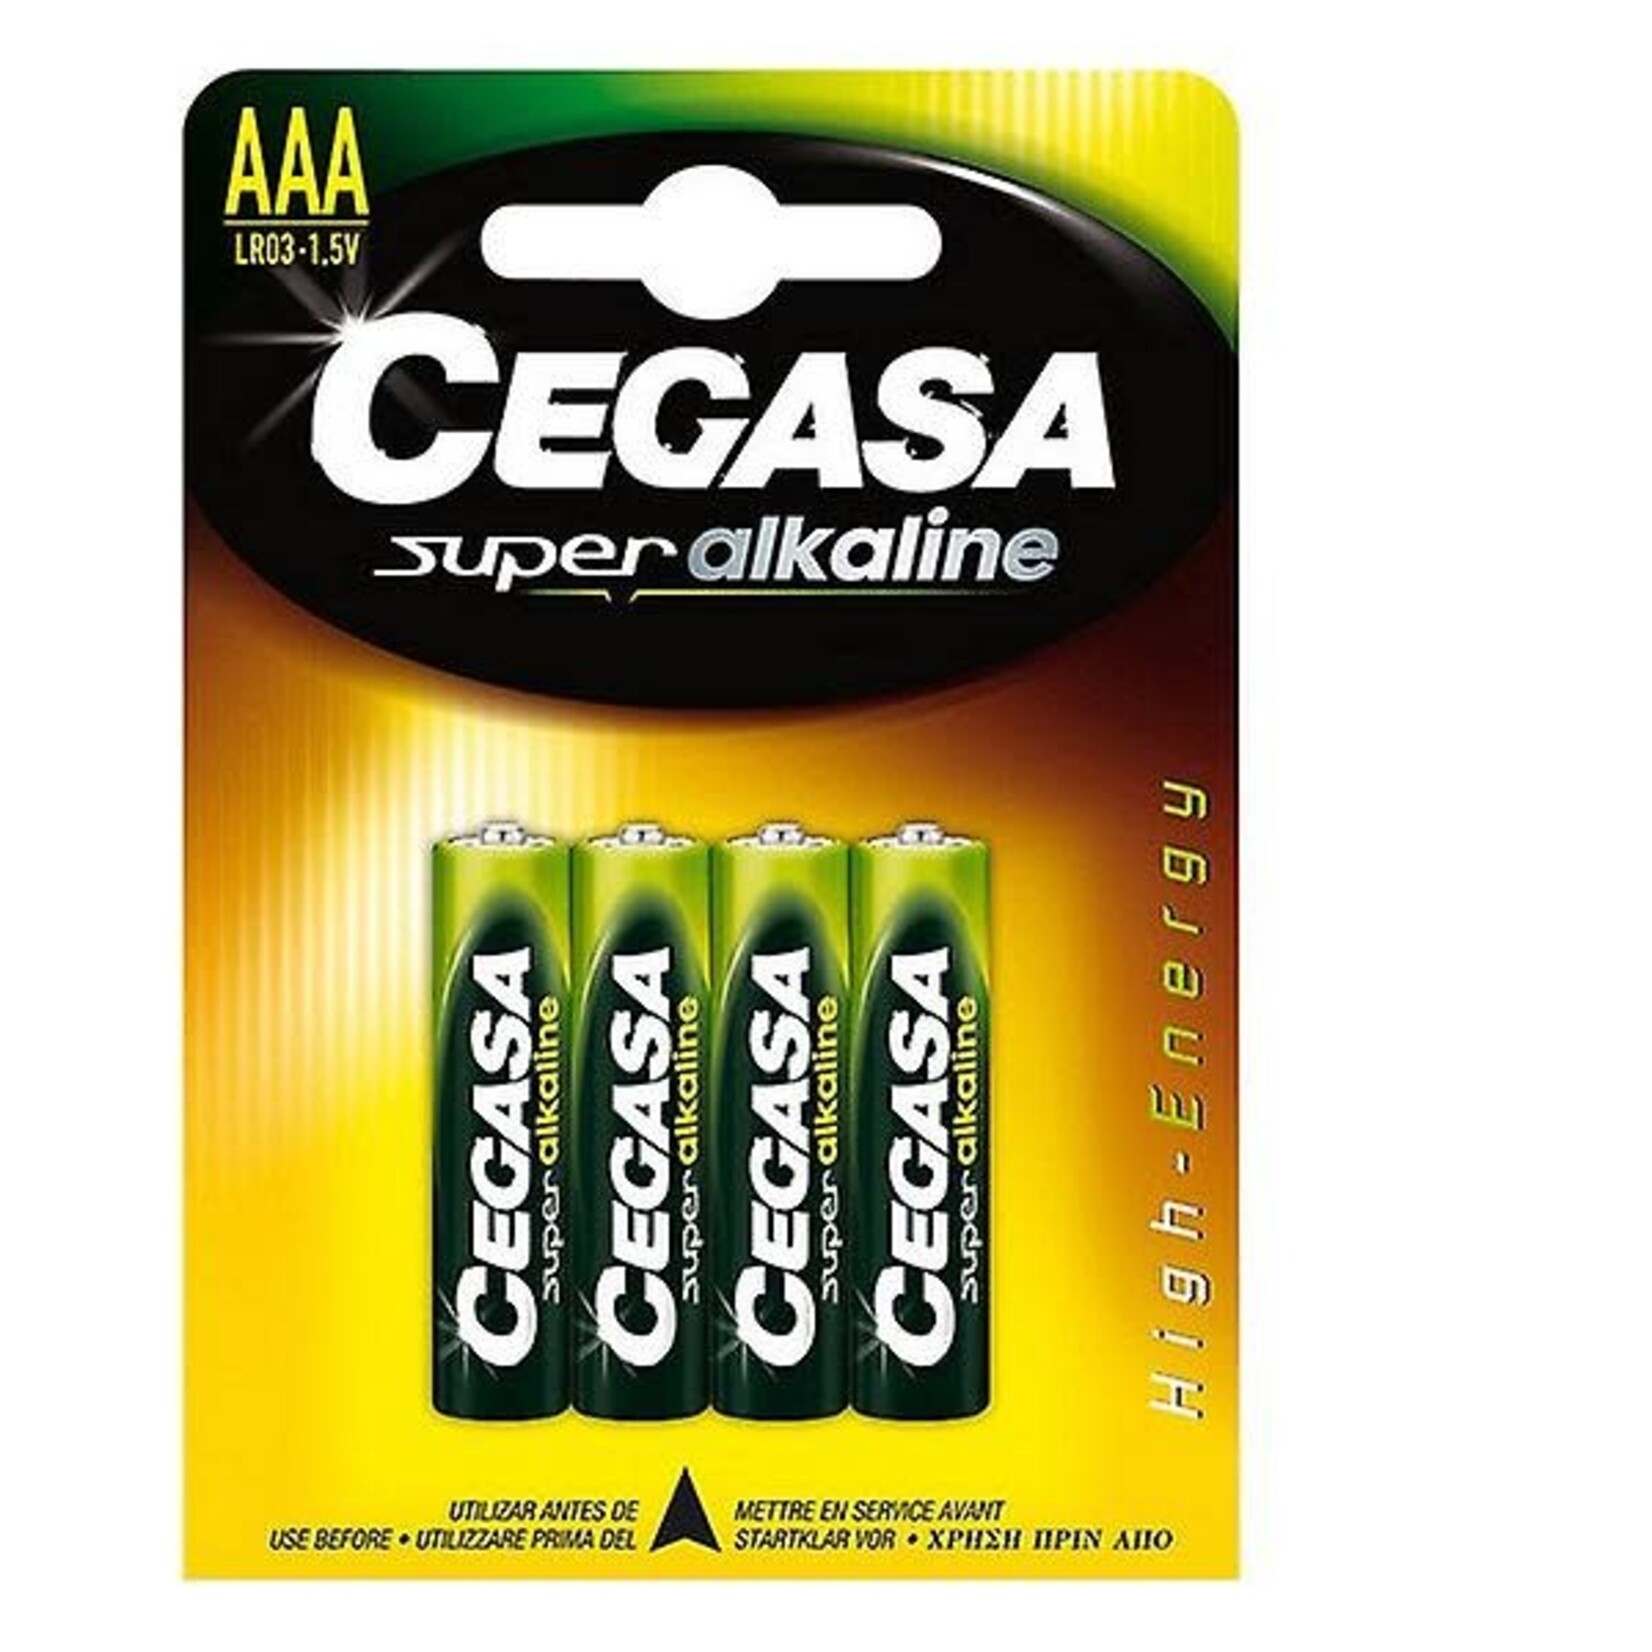 CeGasa Cegasa Super Alkaline LR03 'AAA' - 4 Batteries